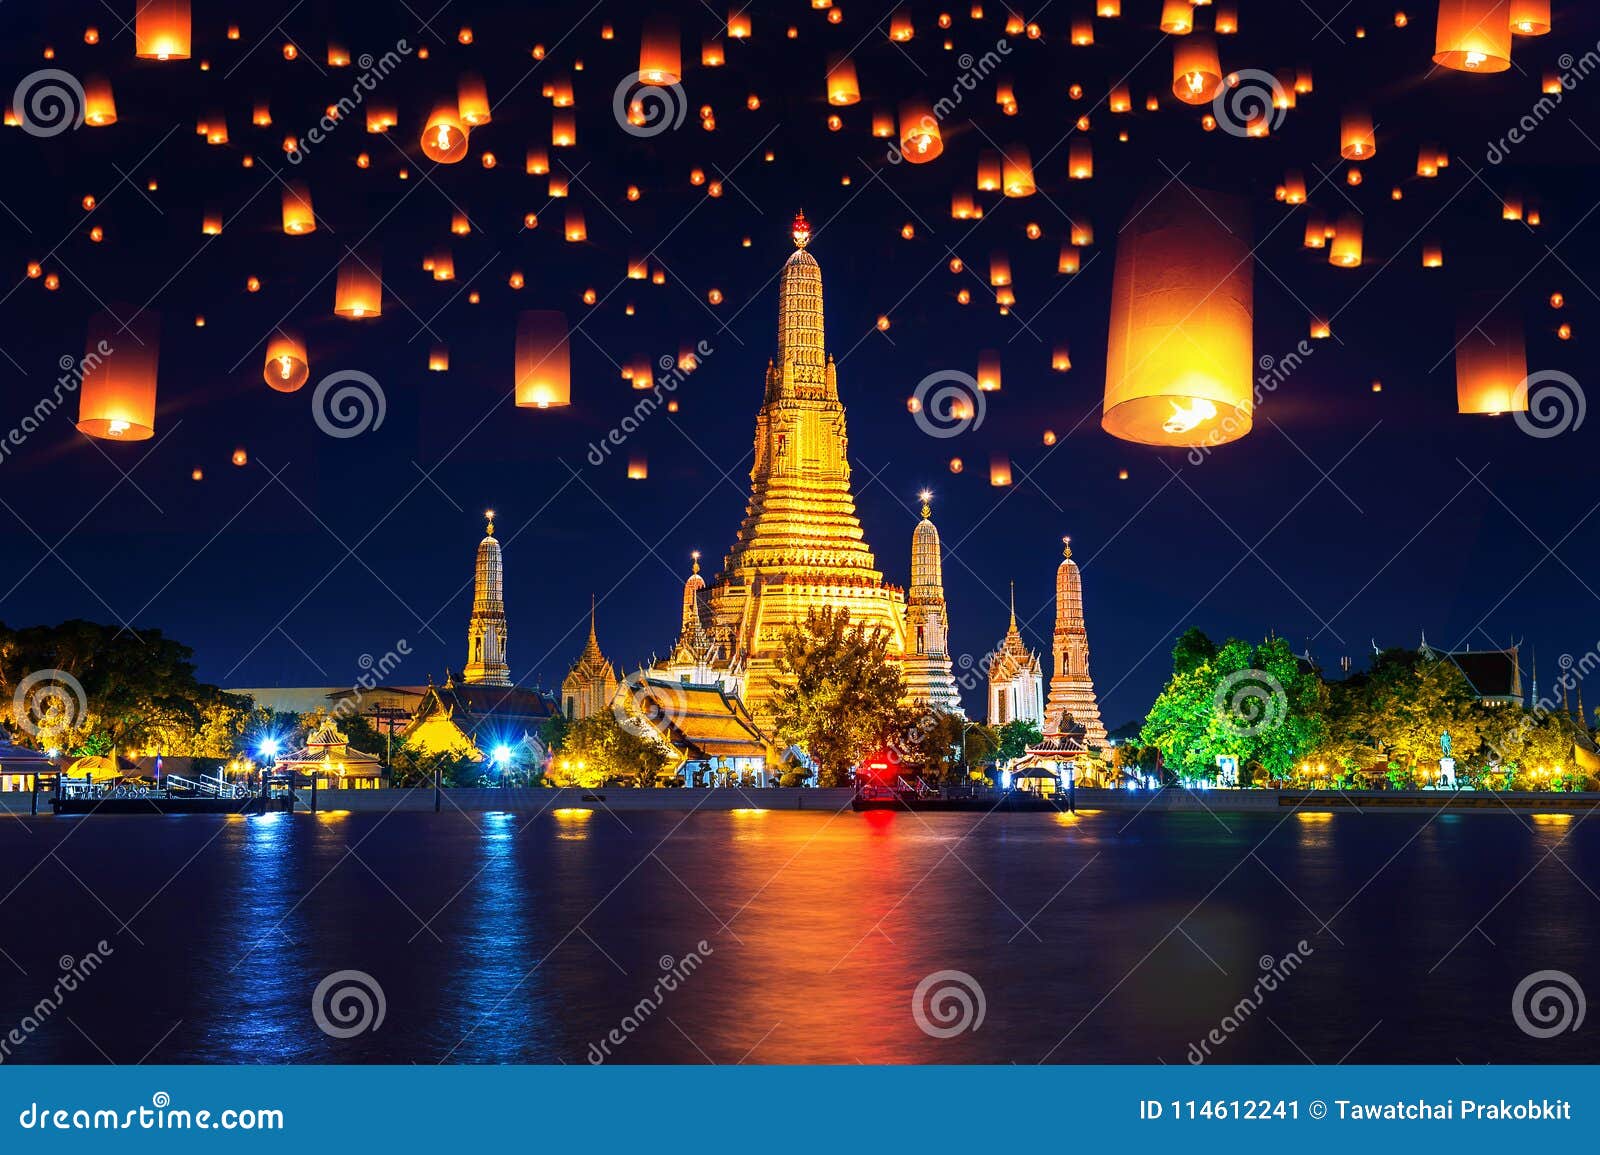 wat arun temple and floating lantern in bangkok, thailand